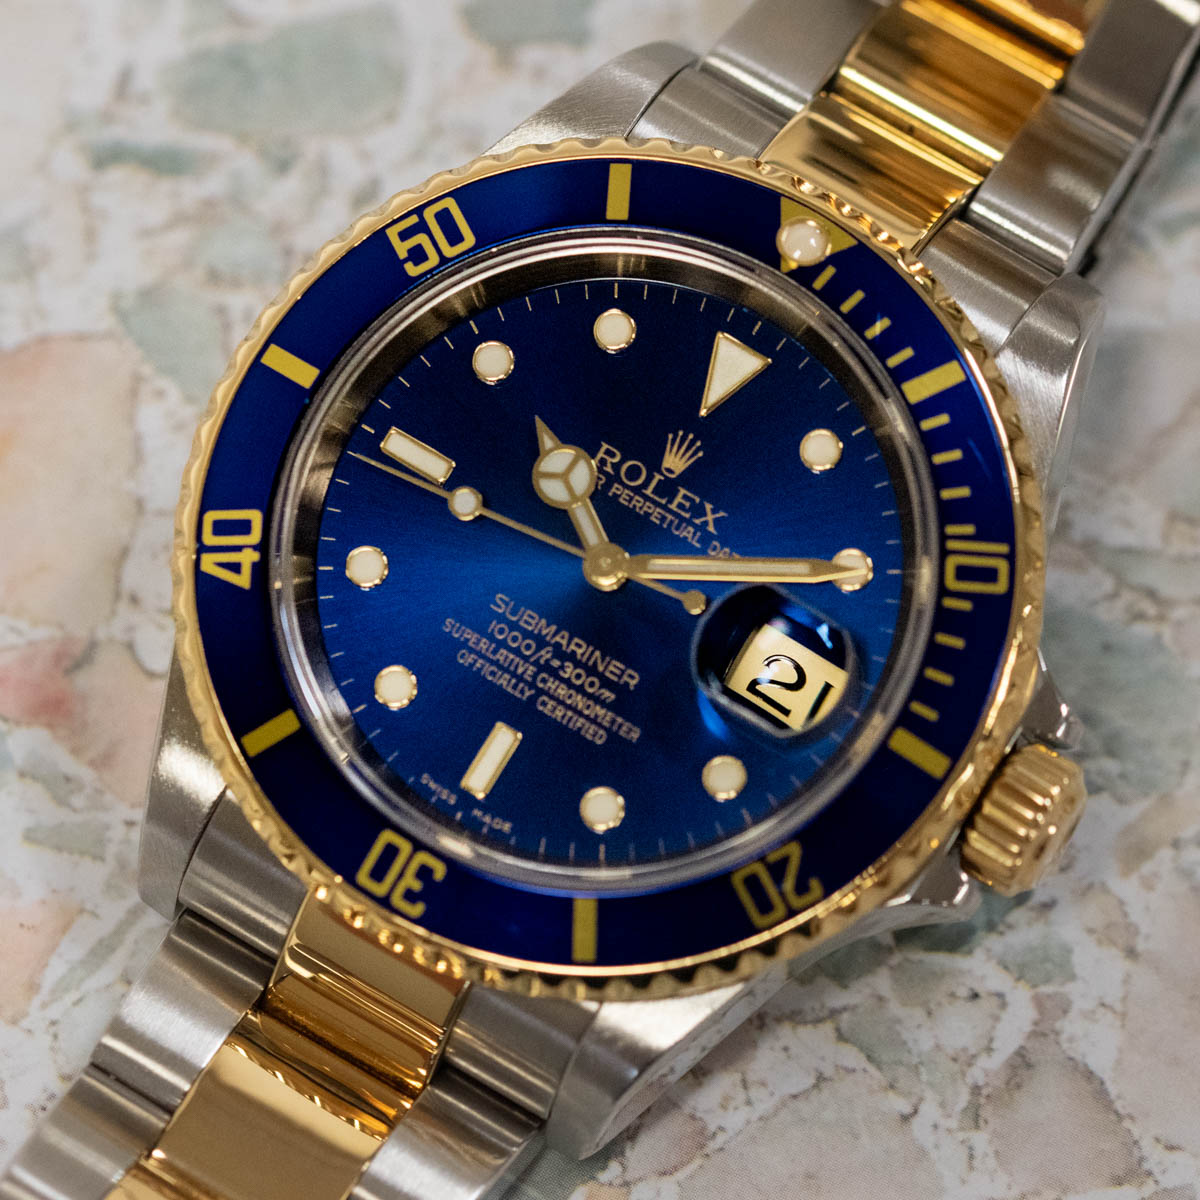 Rolex Submariner Date : 16613 LB deep blue dial